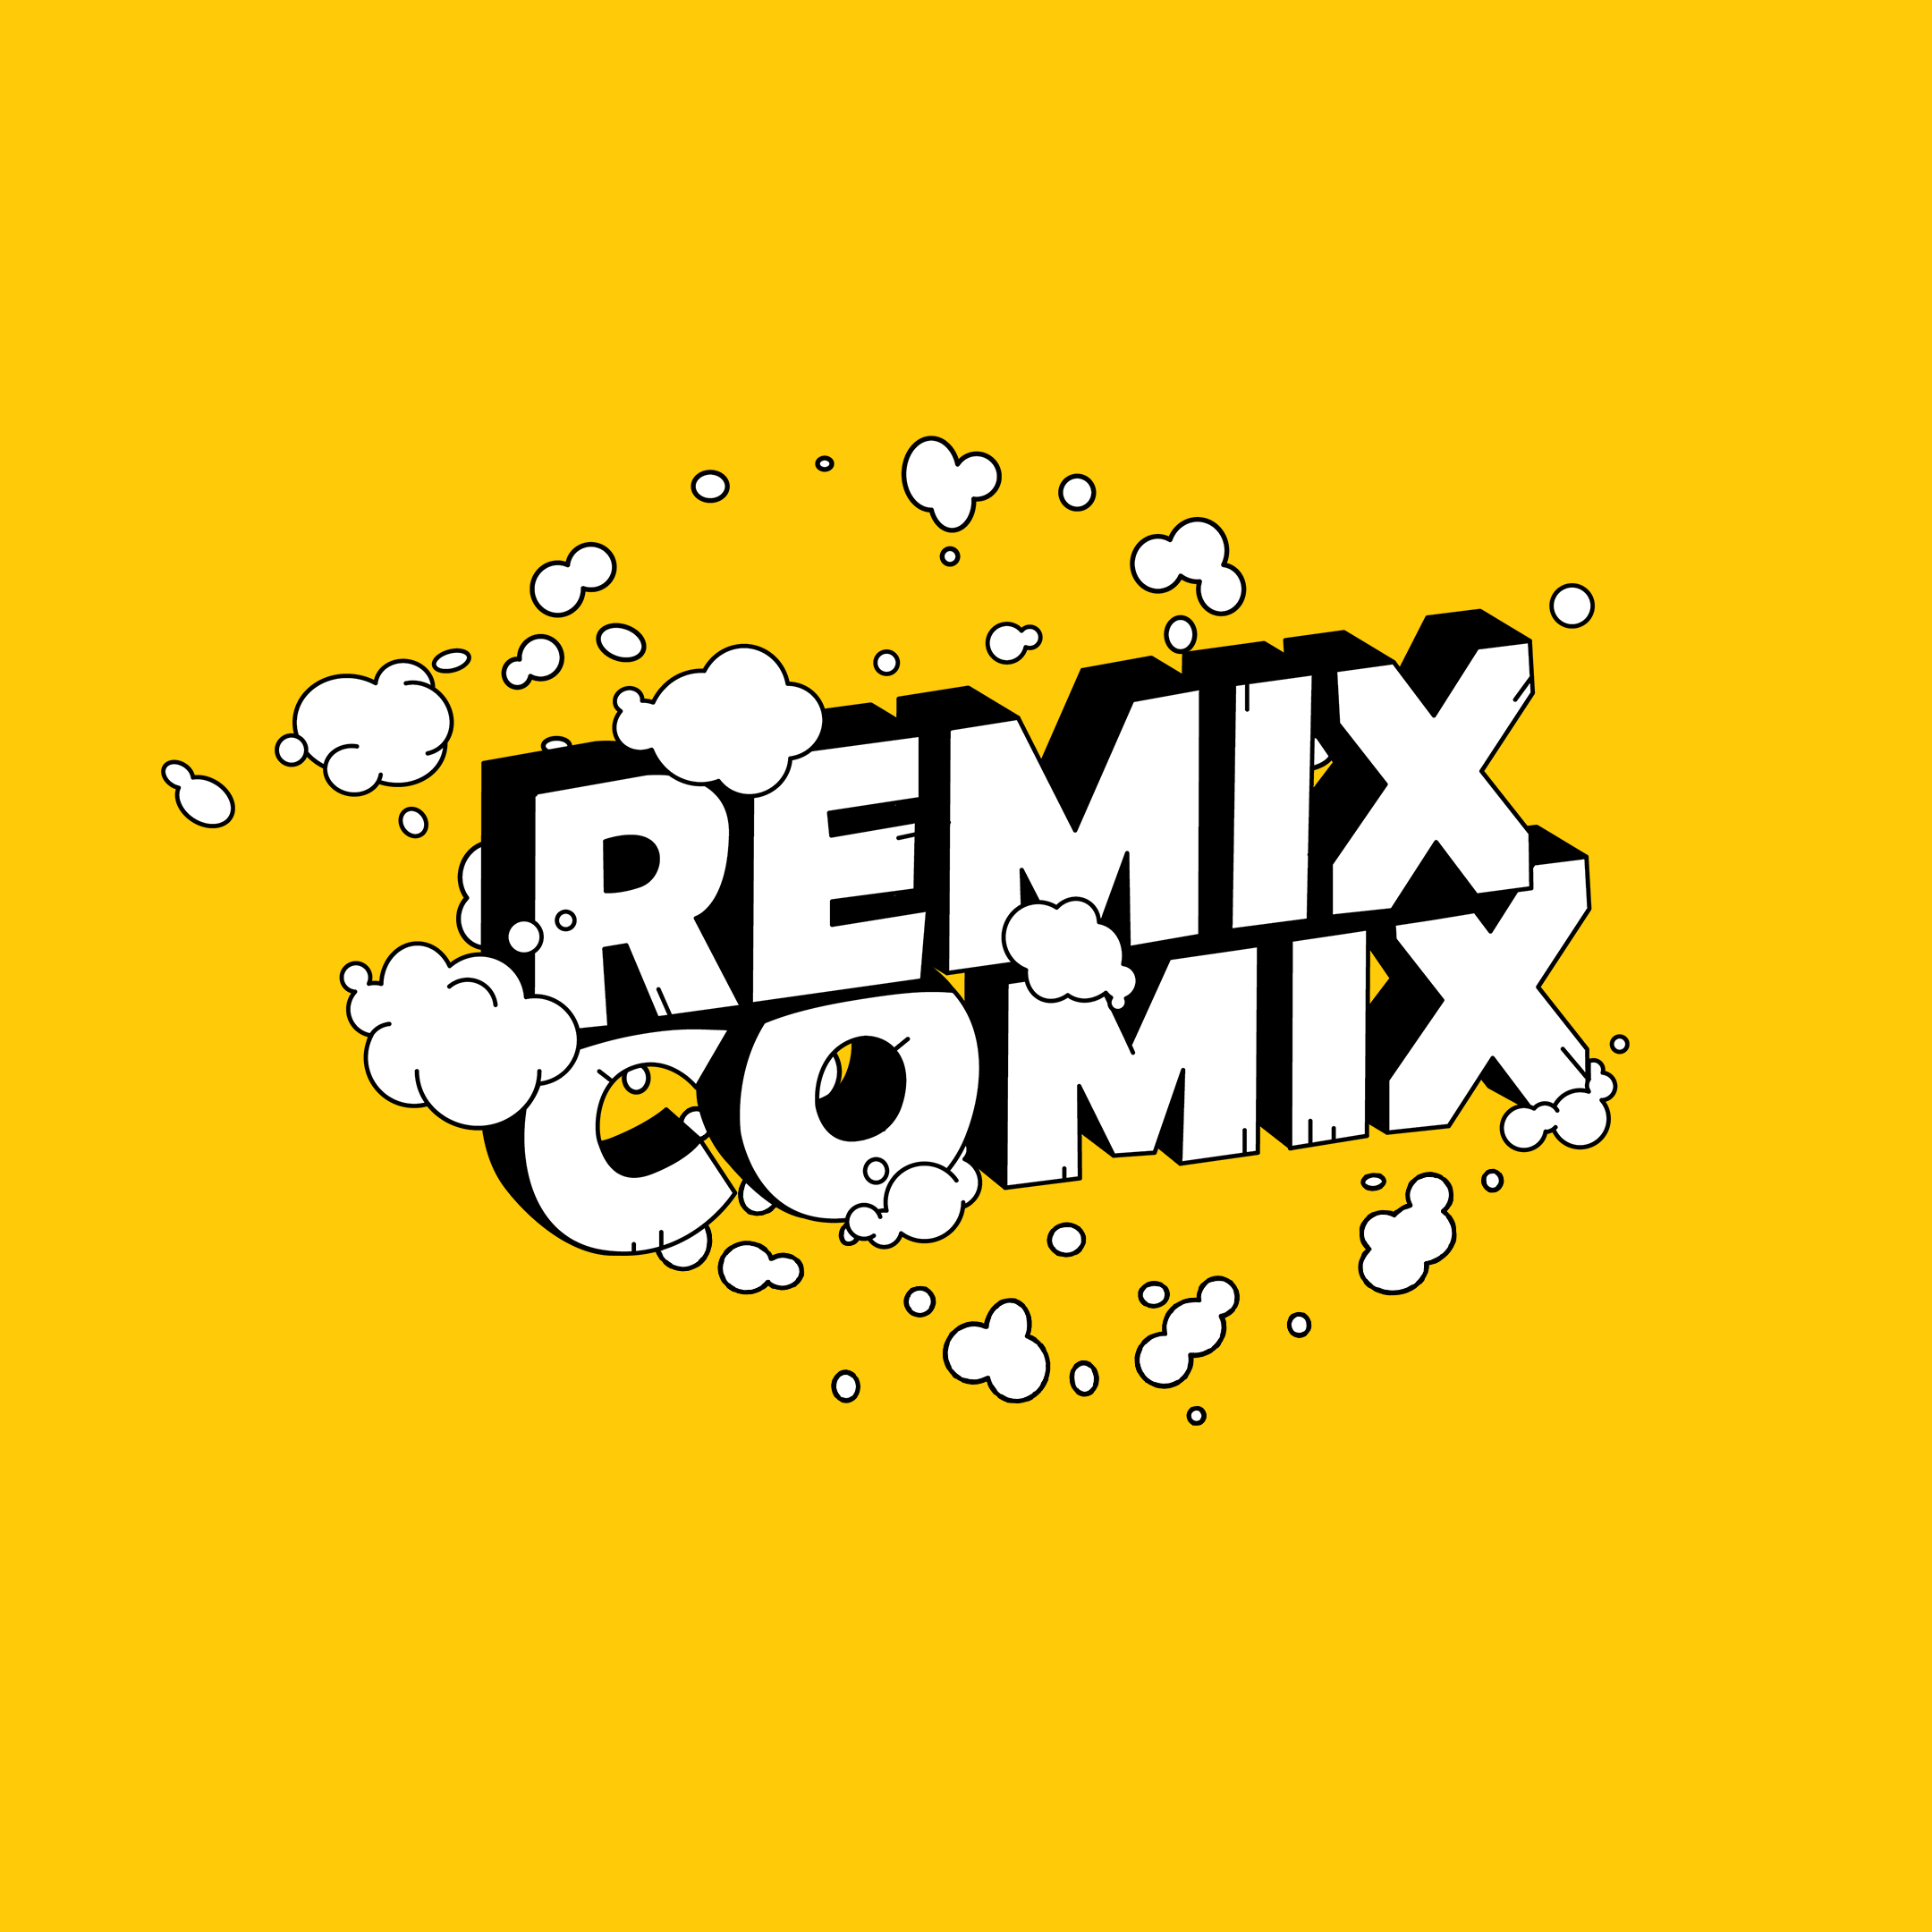 Remix Comix – Comics for Heritage